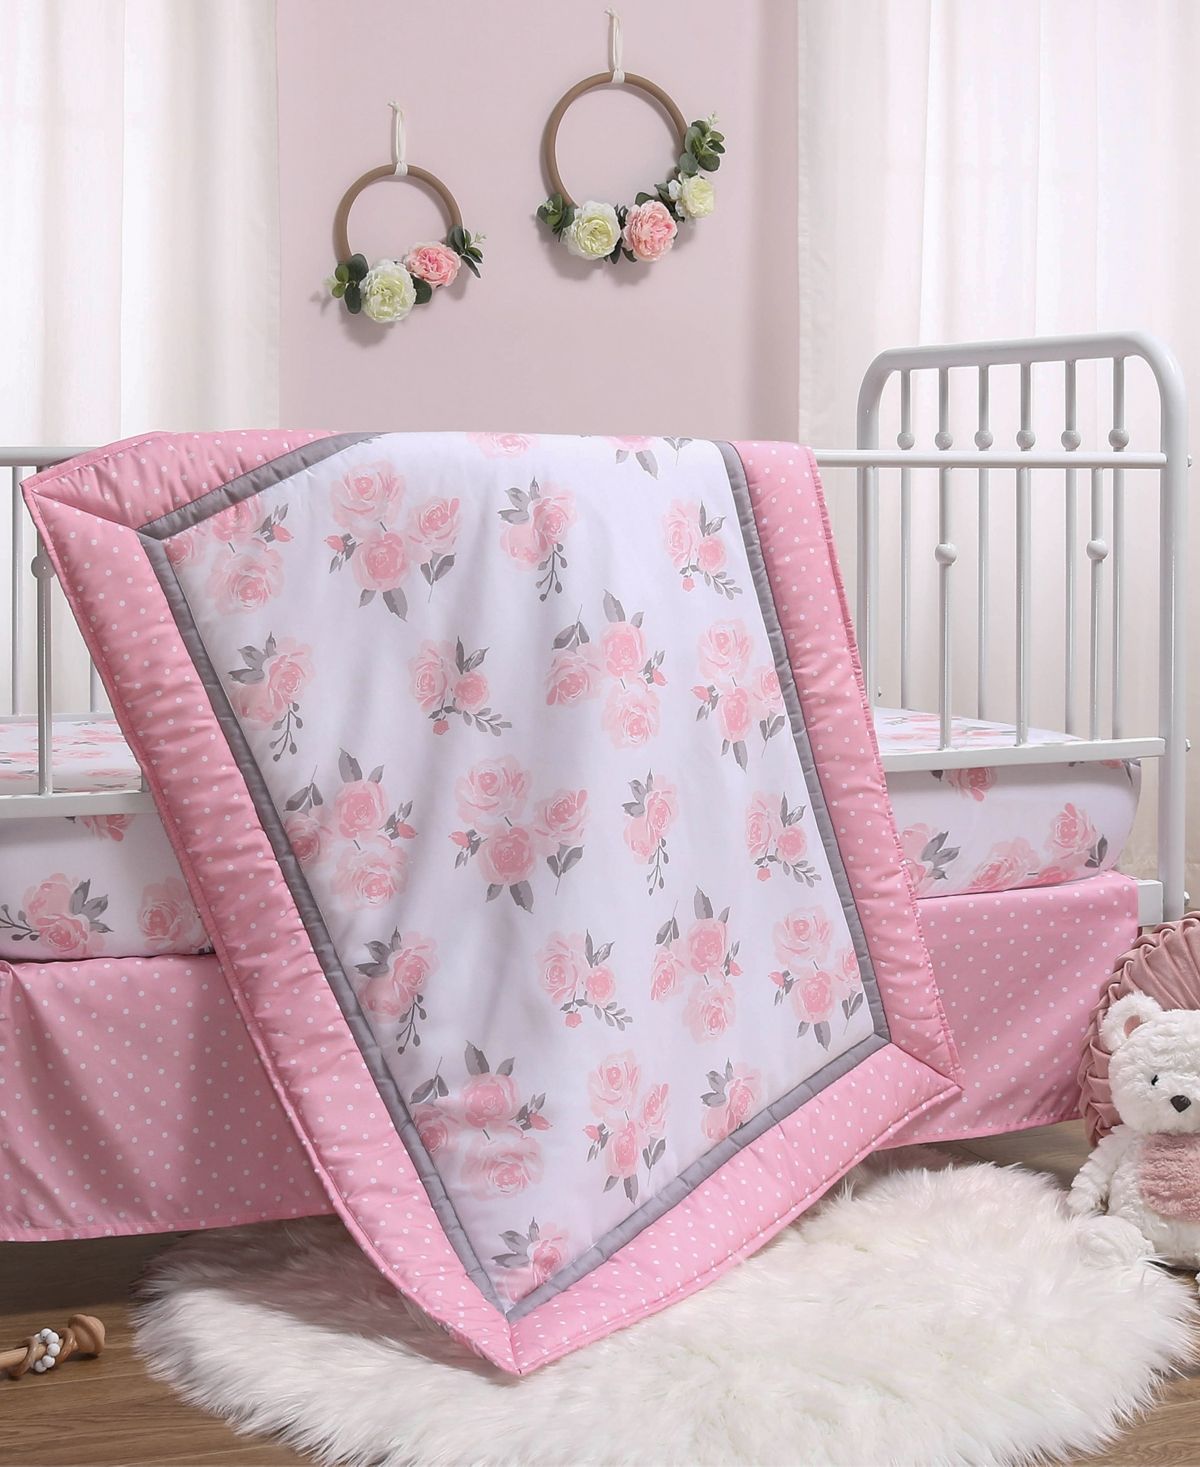 The Peanutshell Floral Crib Bedding Set, 3 Piece Bedding | Macys (US)